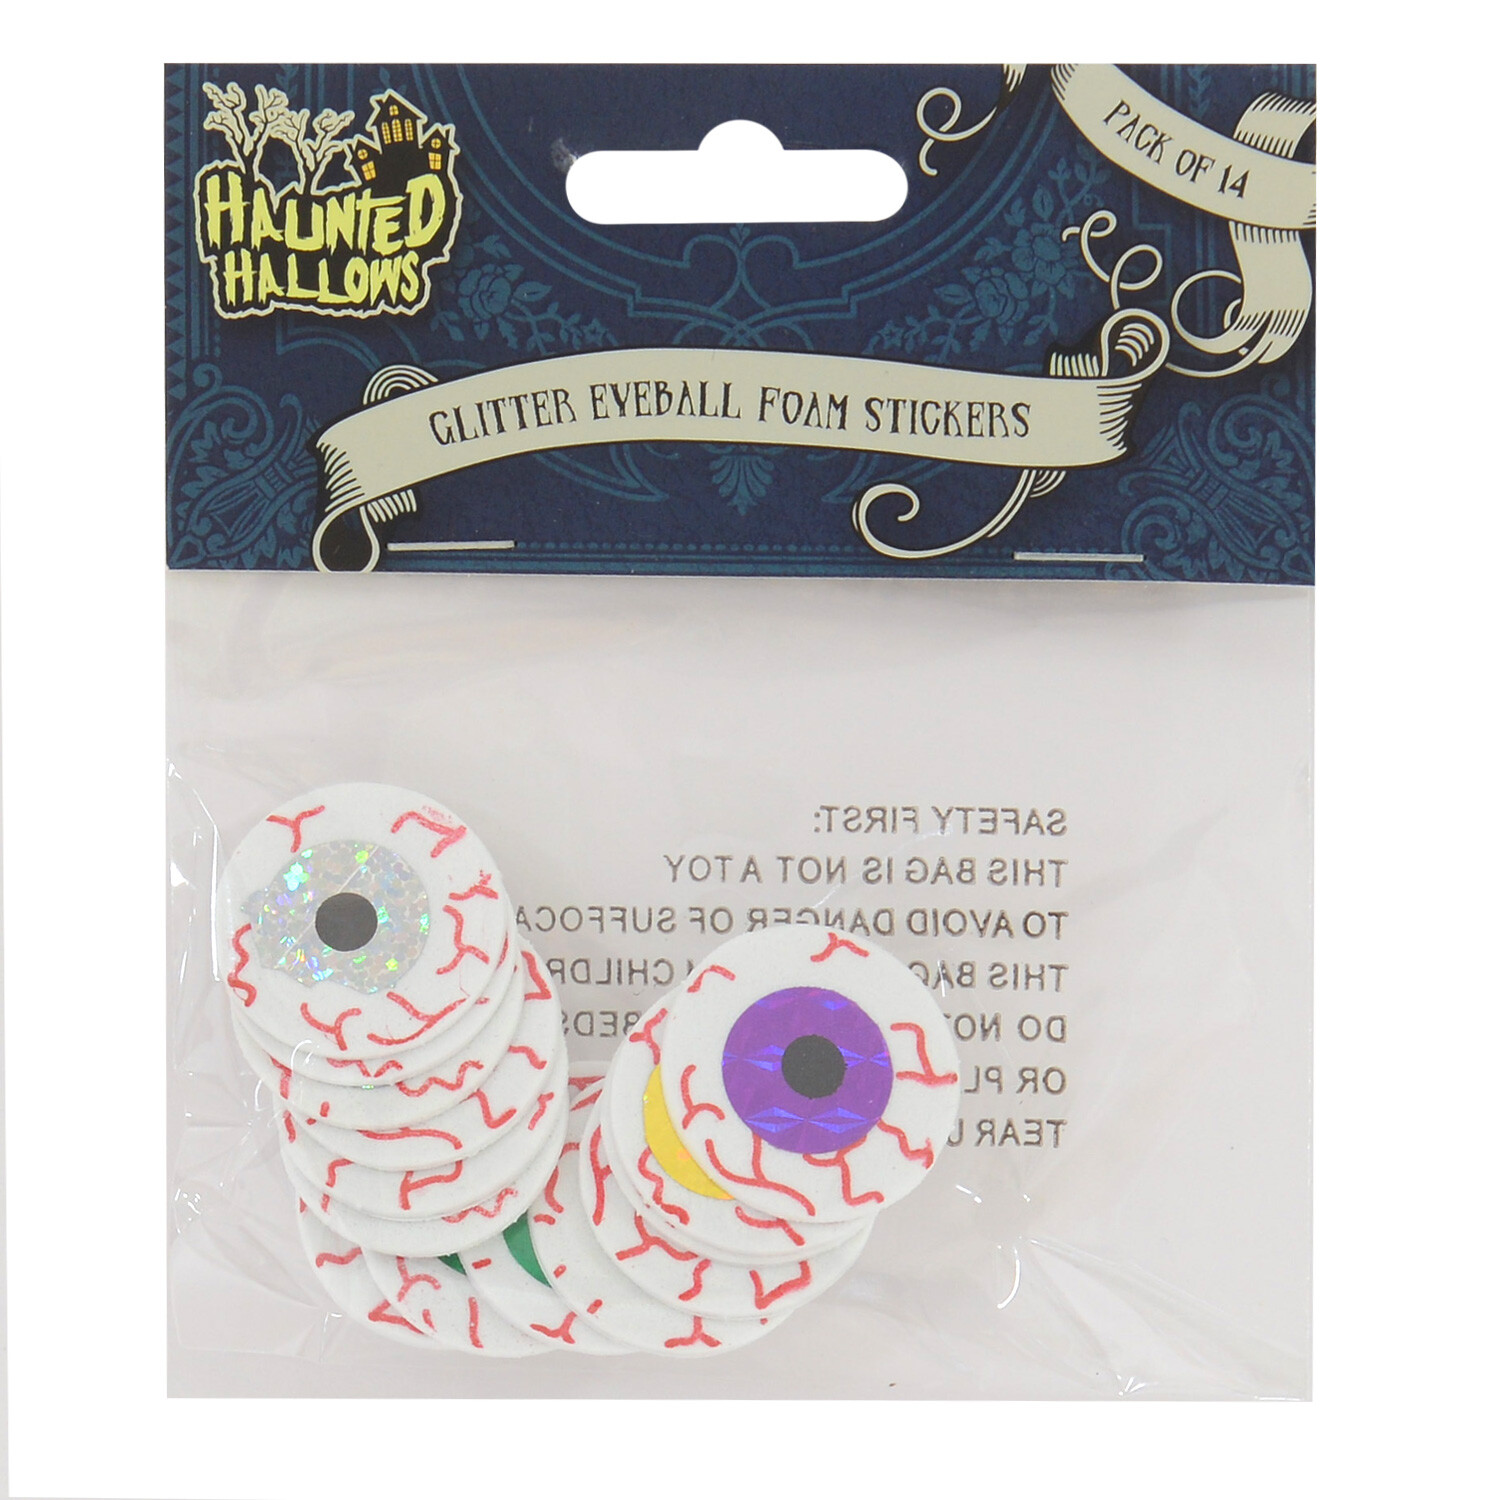 Glitter Eyeball Foam Stickers Image